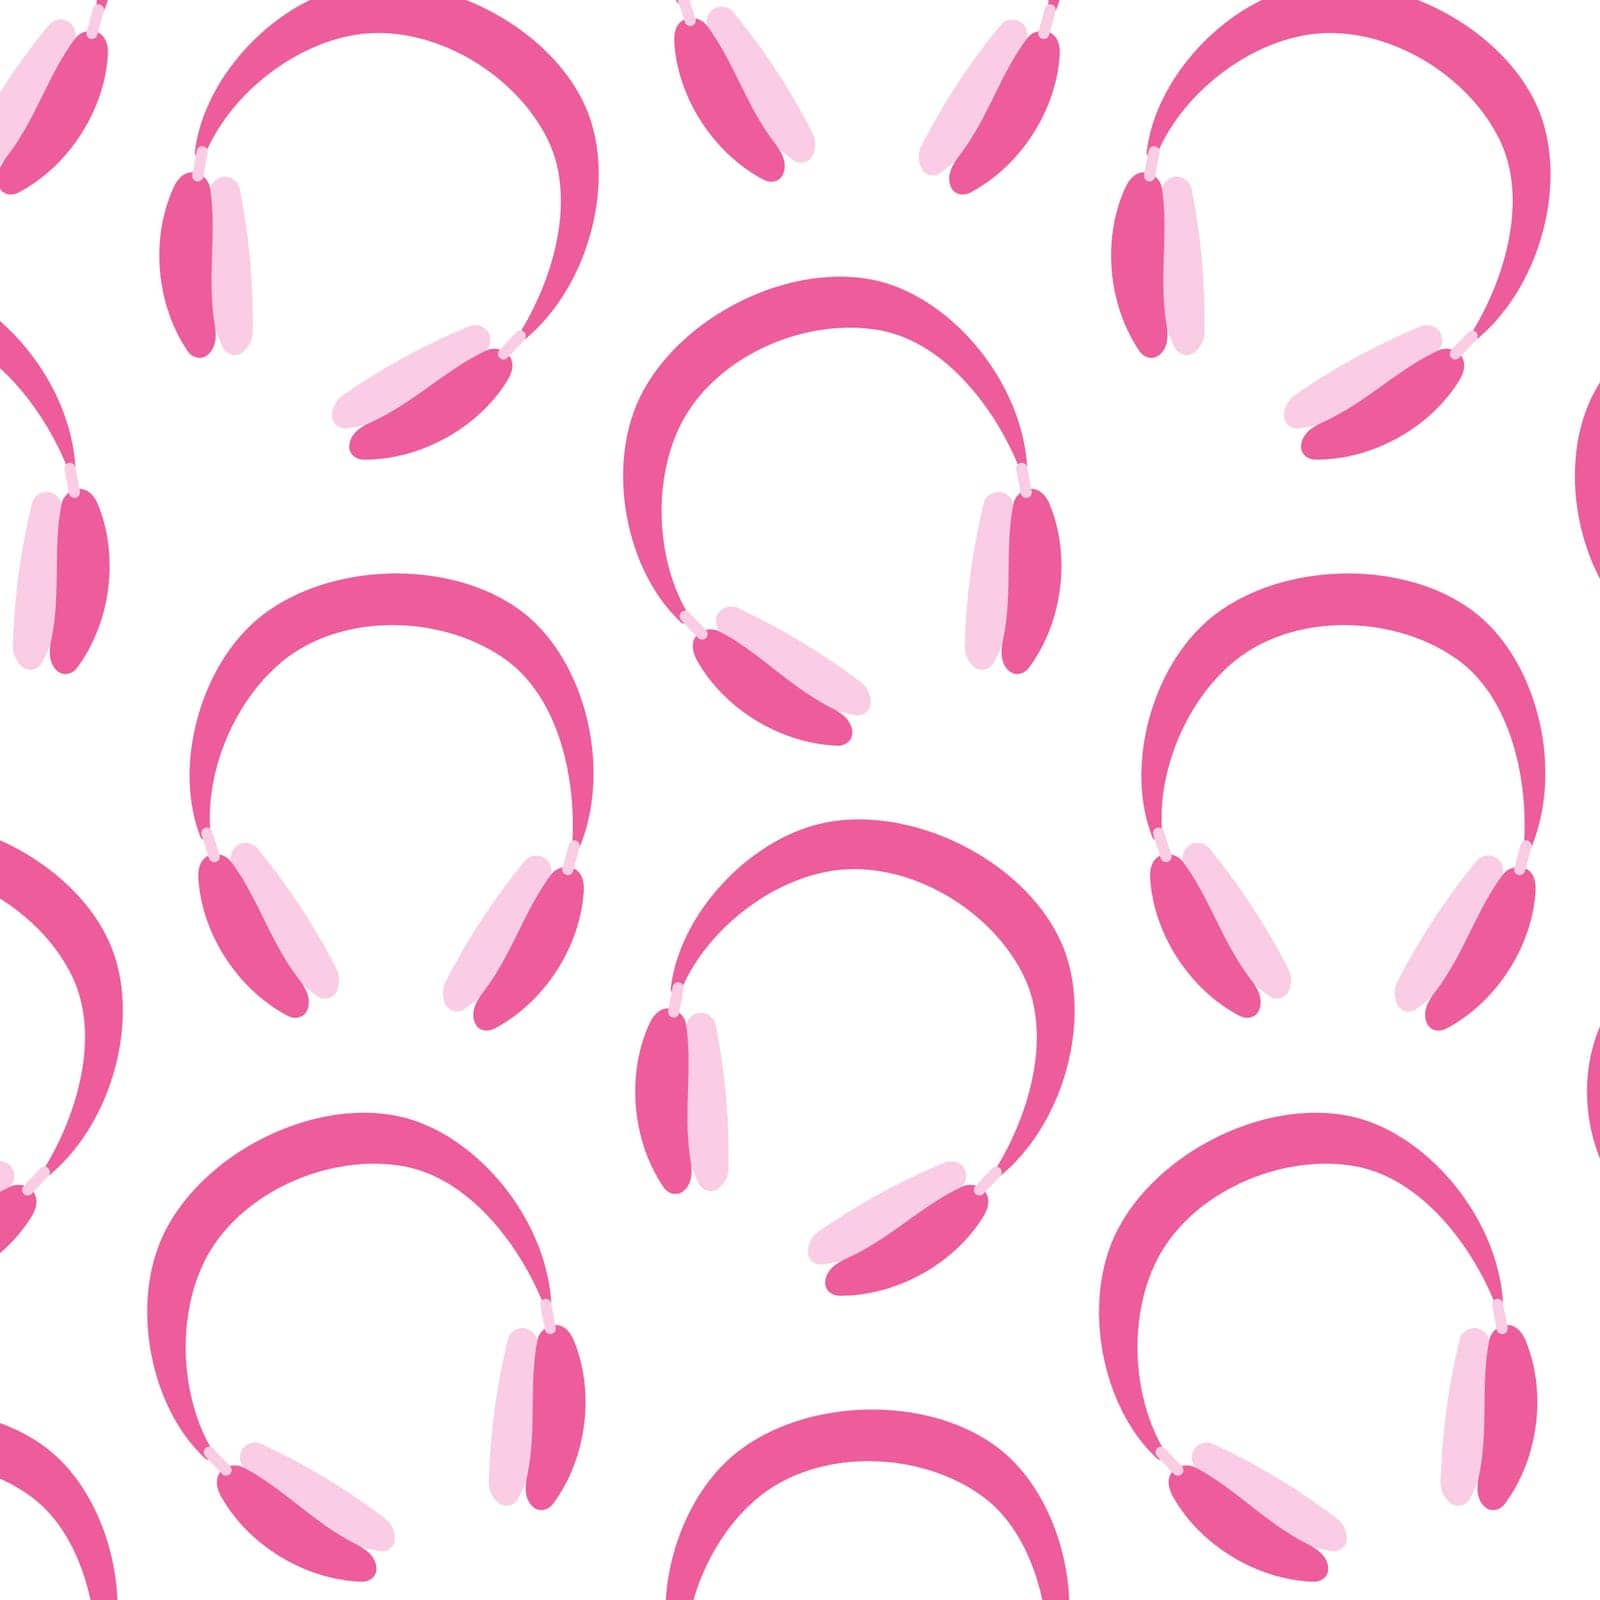 barbicore headphones pink warm doll girl accessory by kristushka_15_108